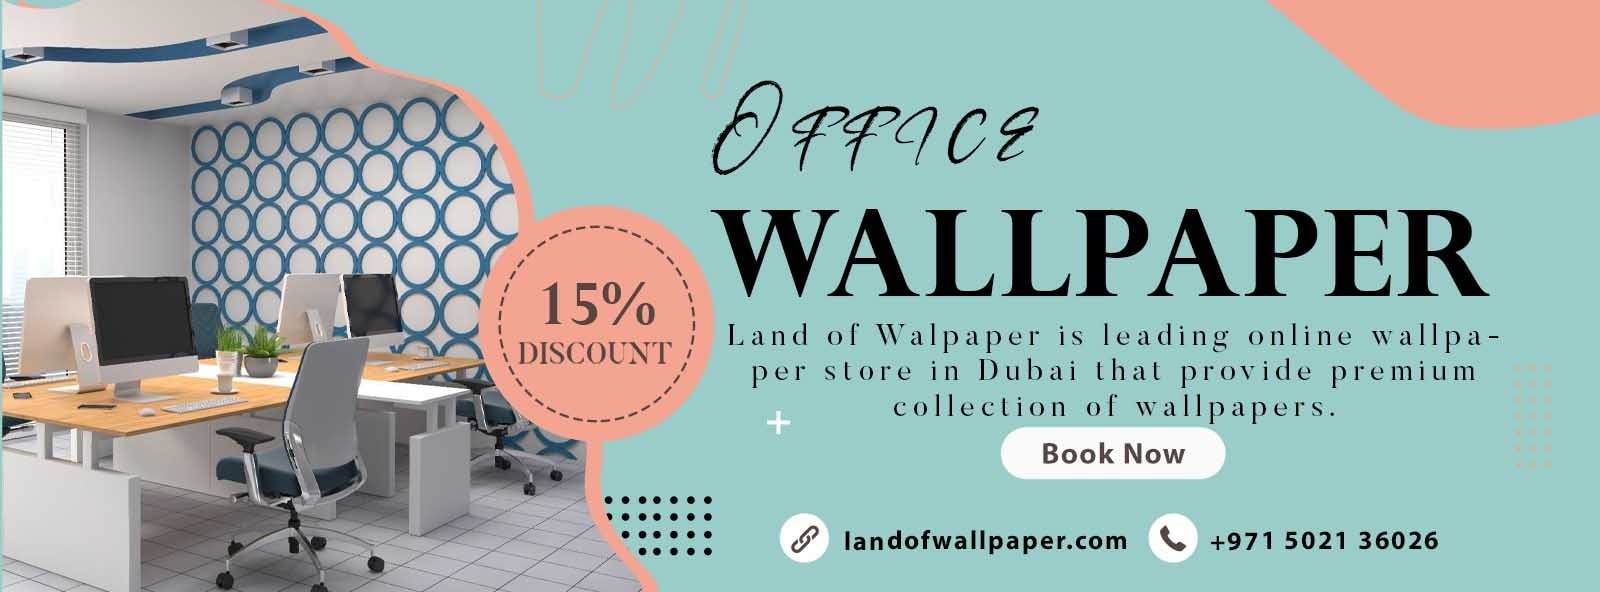 Buy office wallpaper in Dubai